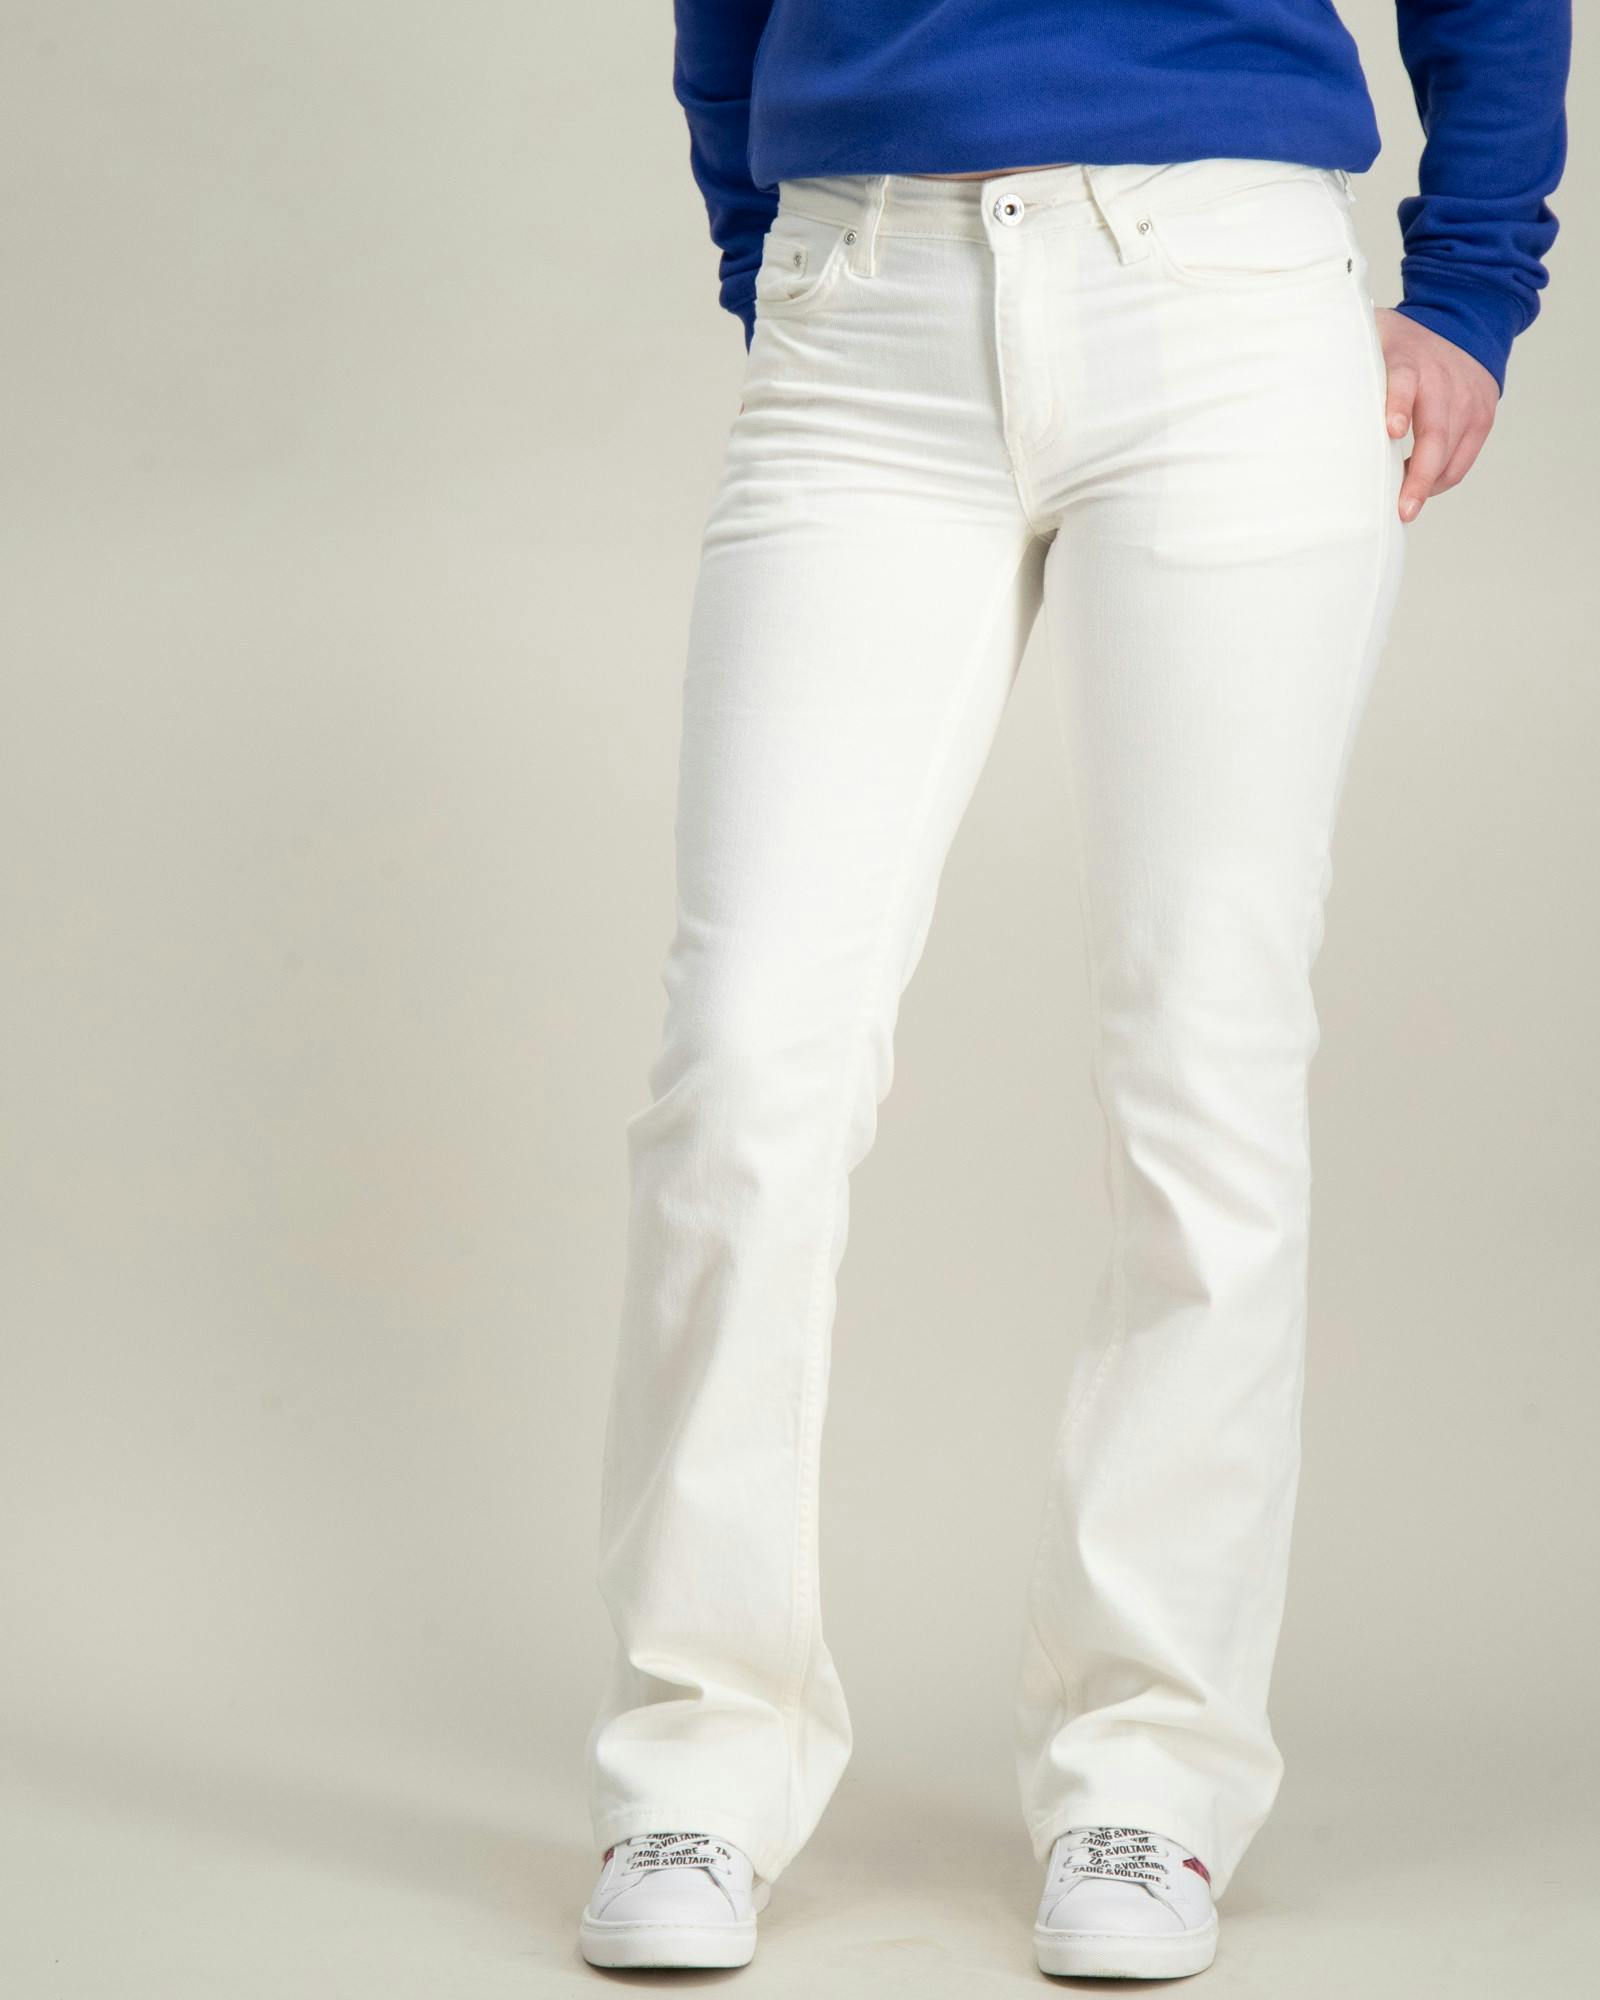 Texas Broken White Jeans